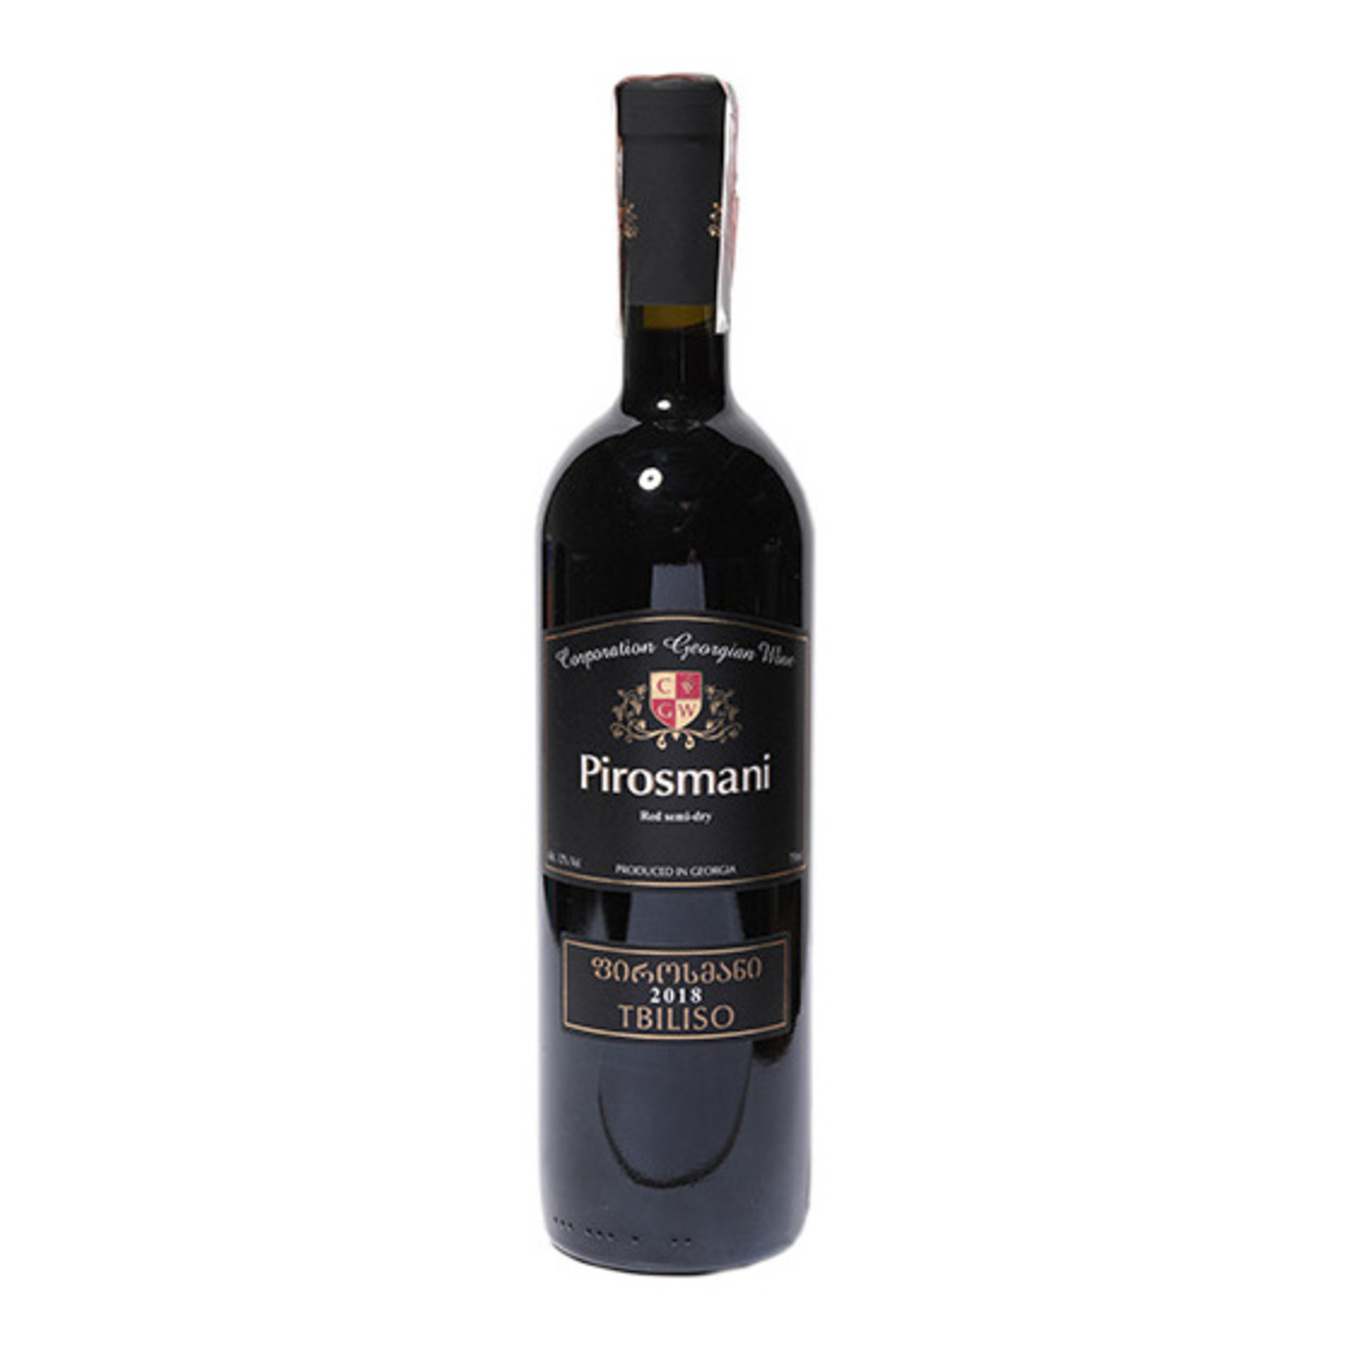 CGW Tbiliso Pirosmani red semi-dry wine 11.5% 0,75l